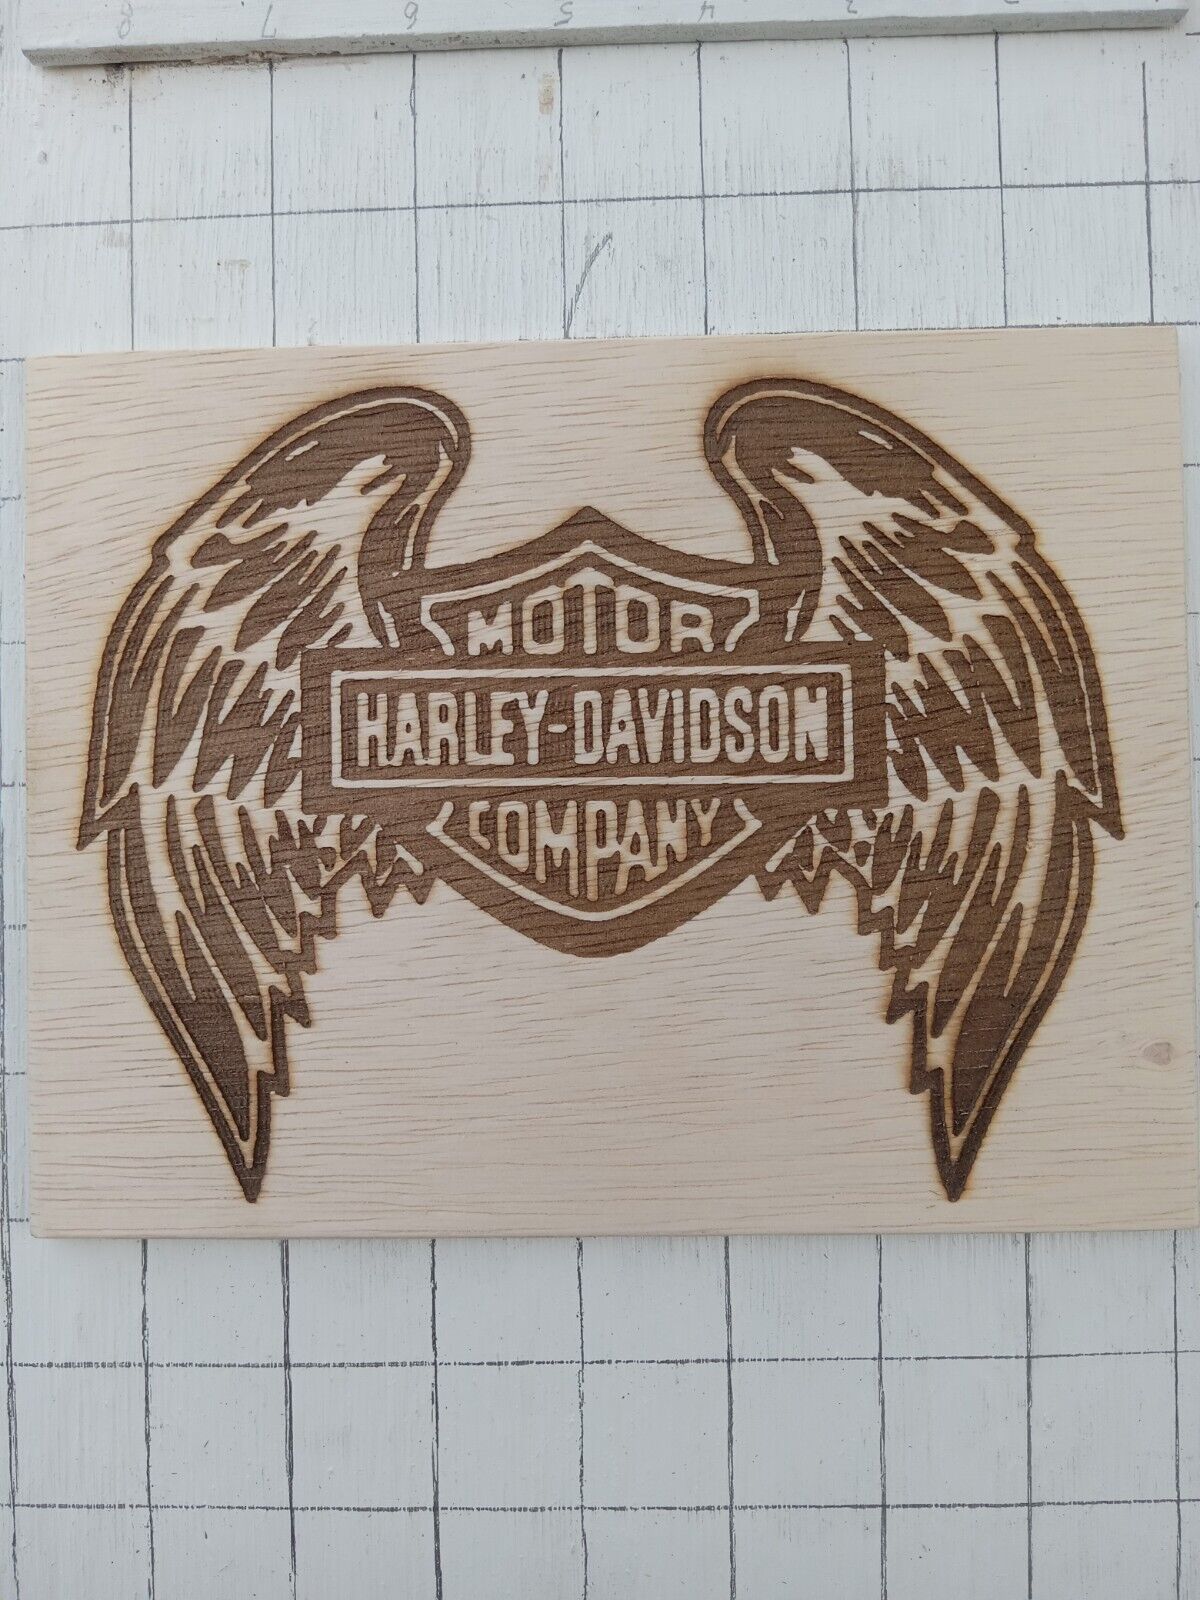 Harley Davidson laser engraved winged logo on wood 6x8x1/4 inch